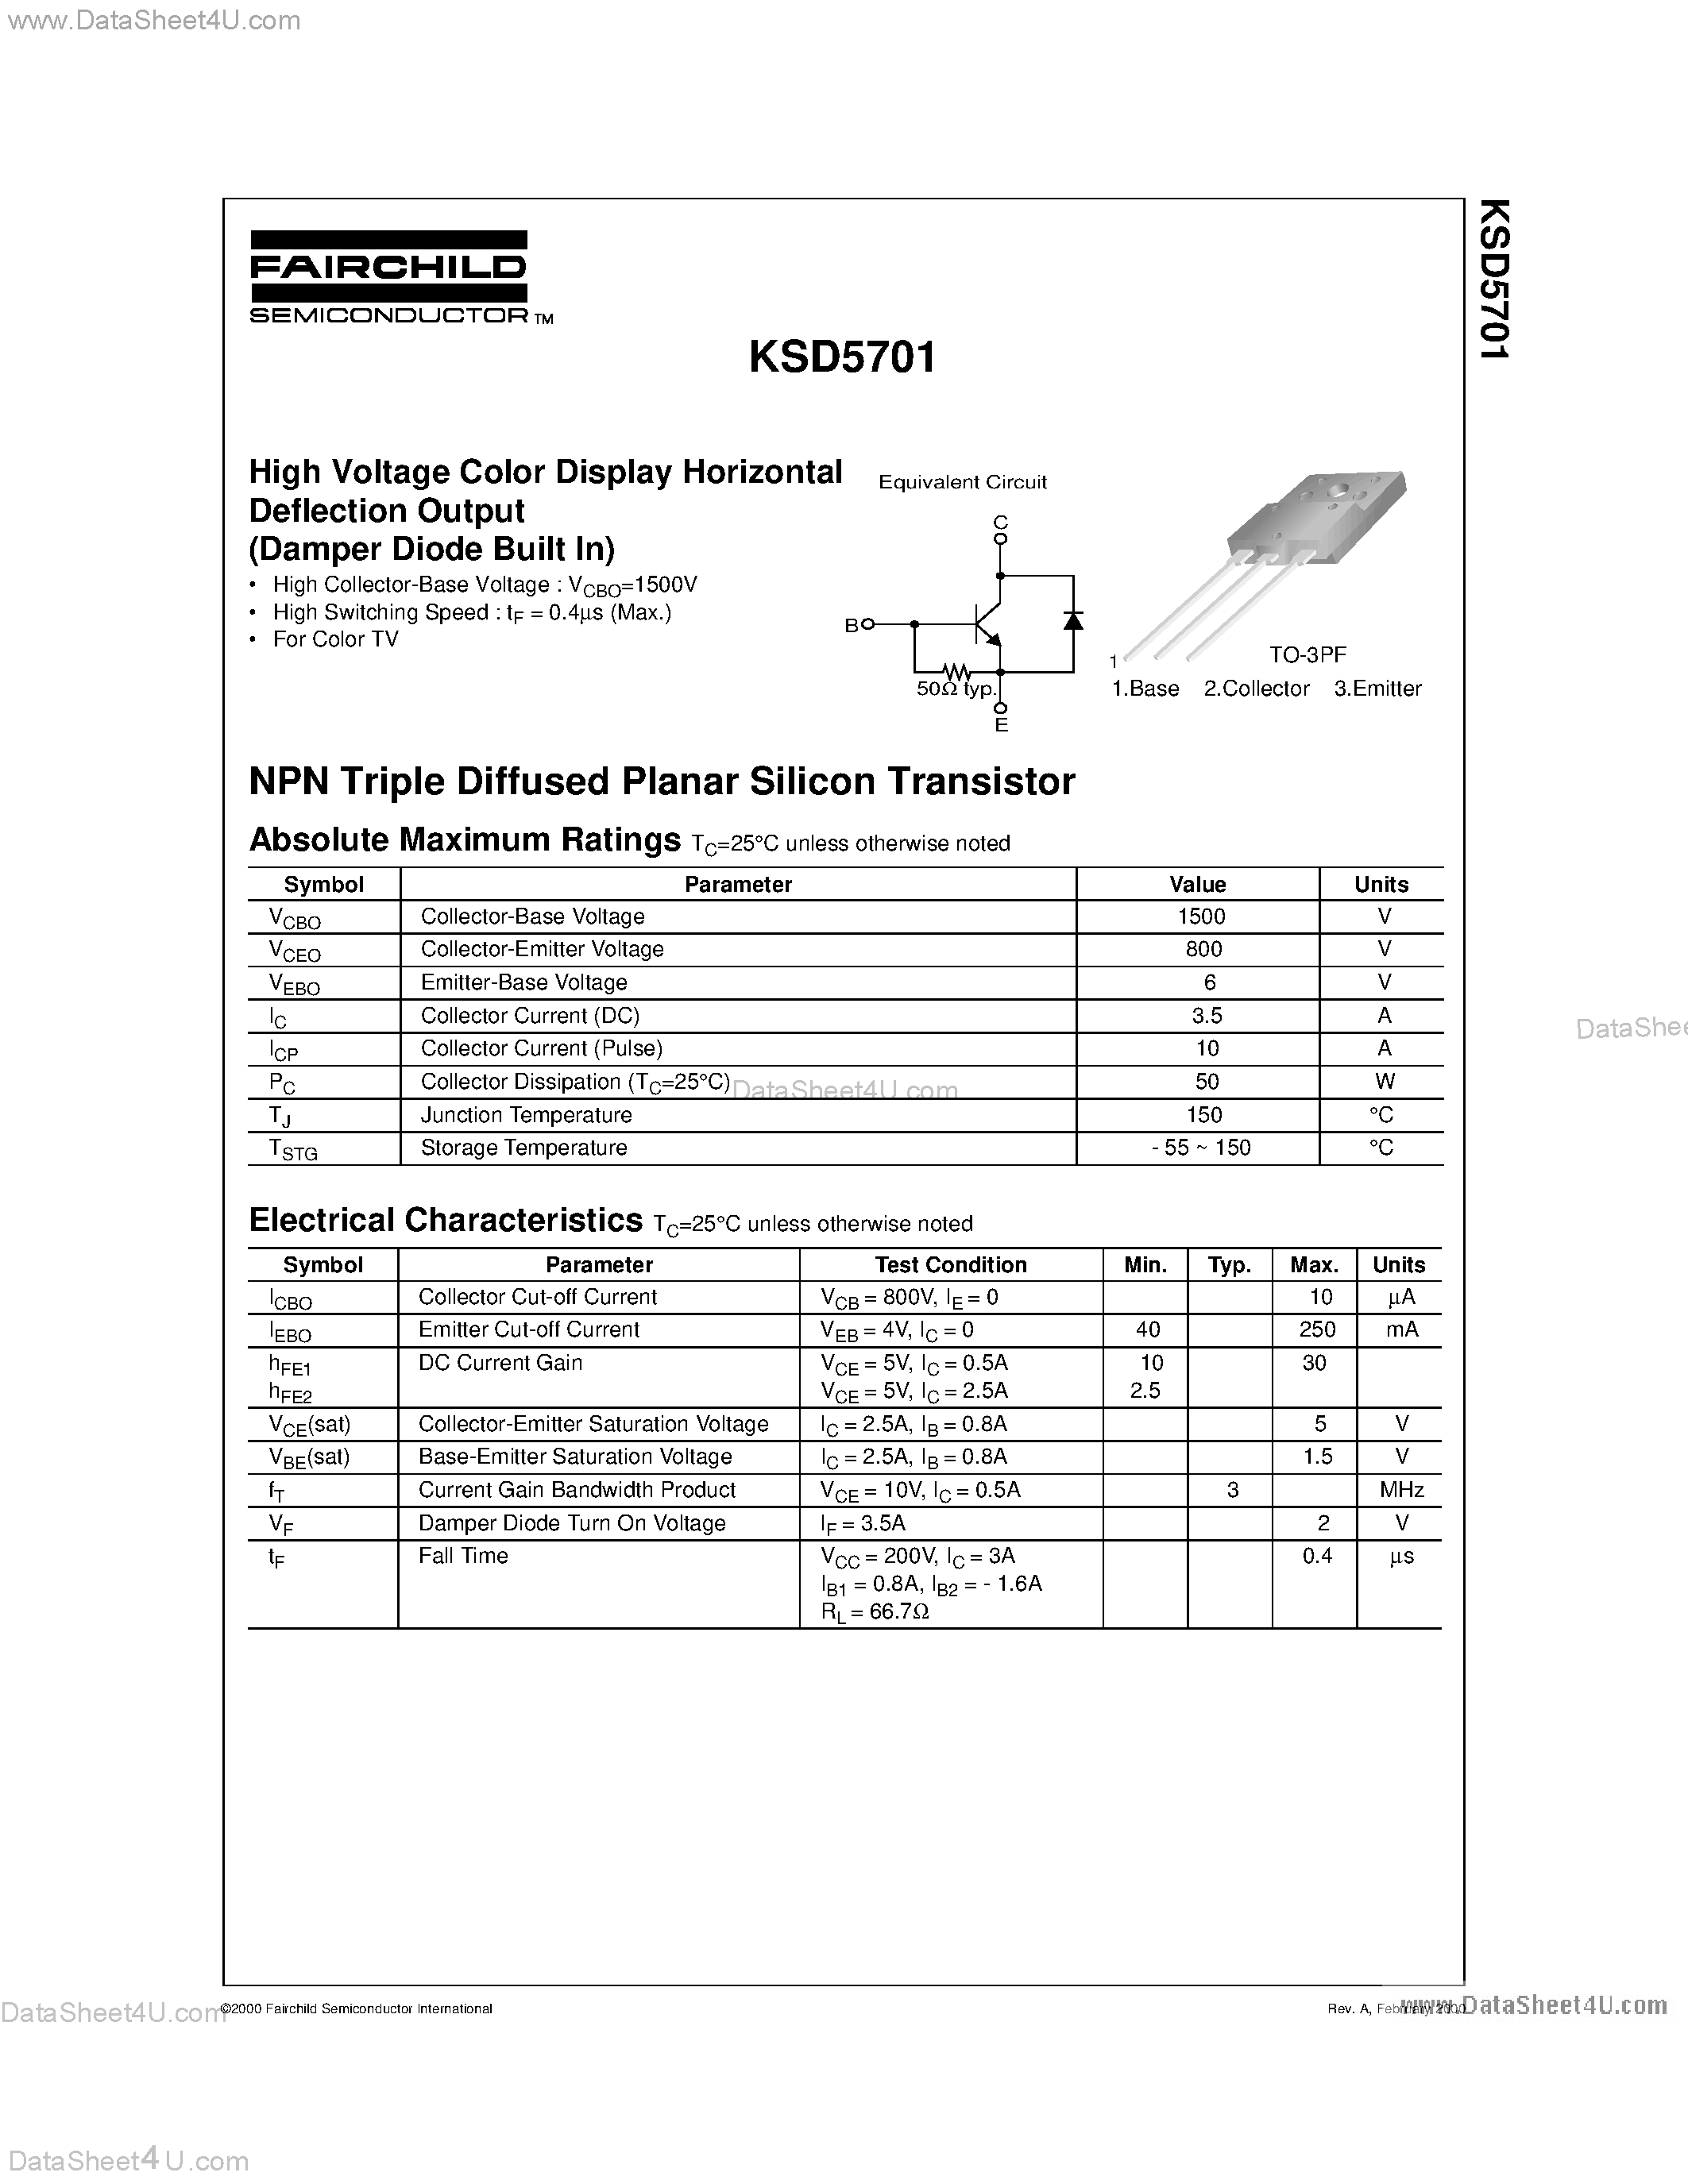 Datasheet KSD5701 - High Voltage Color Display Horizontal Deflection Output page 1